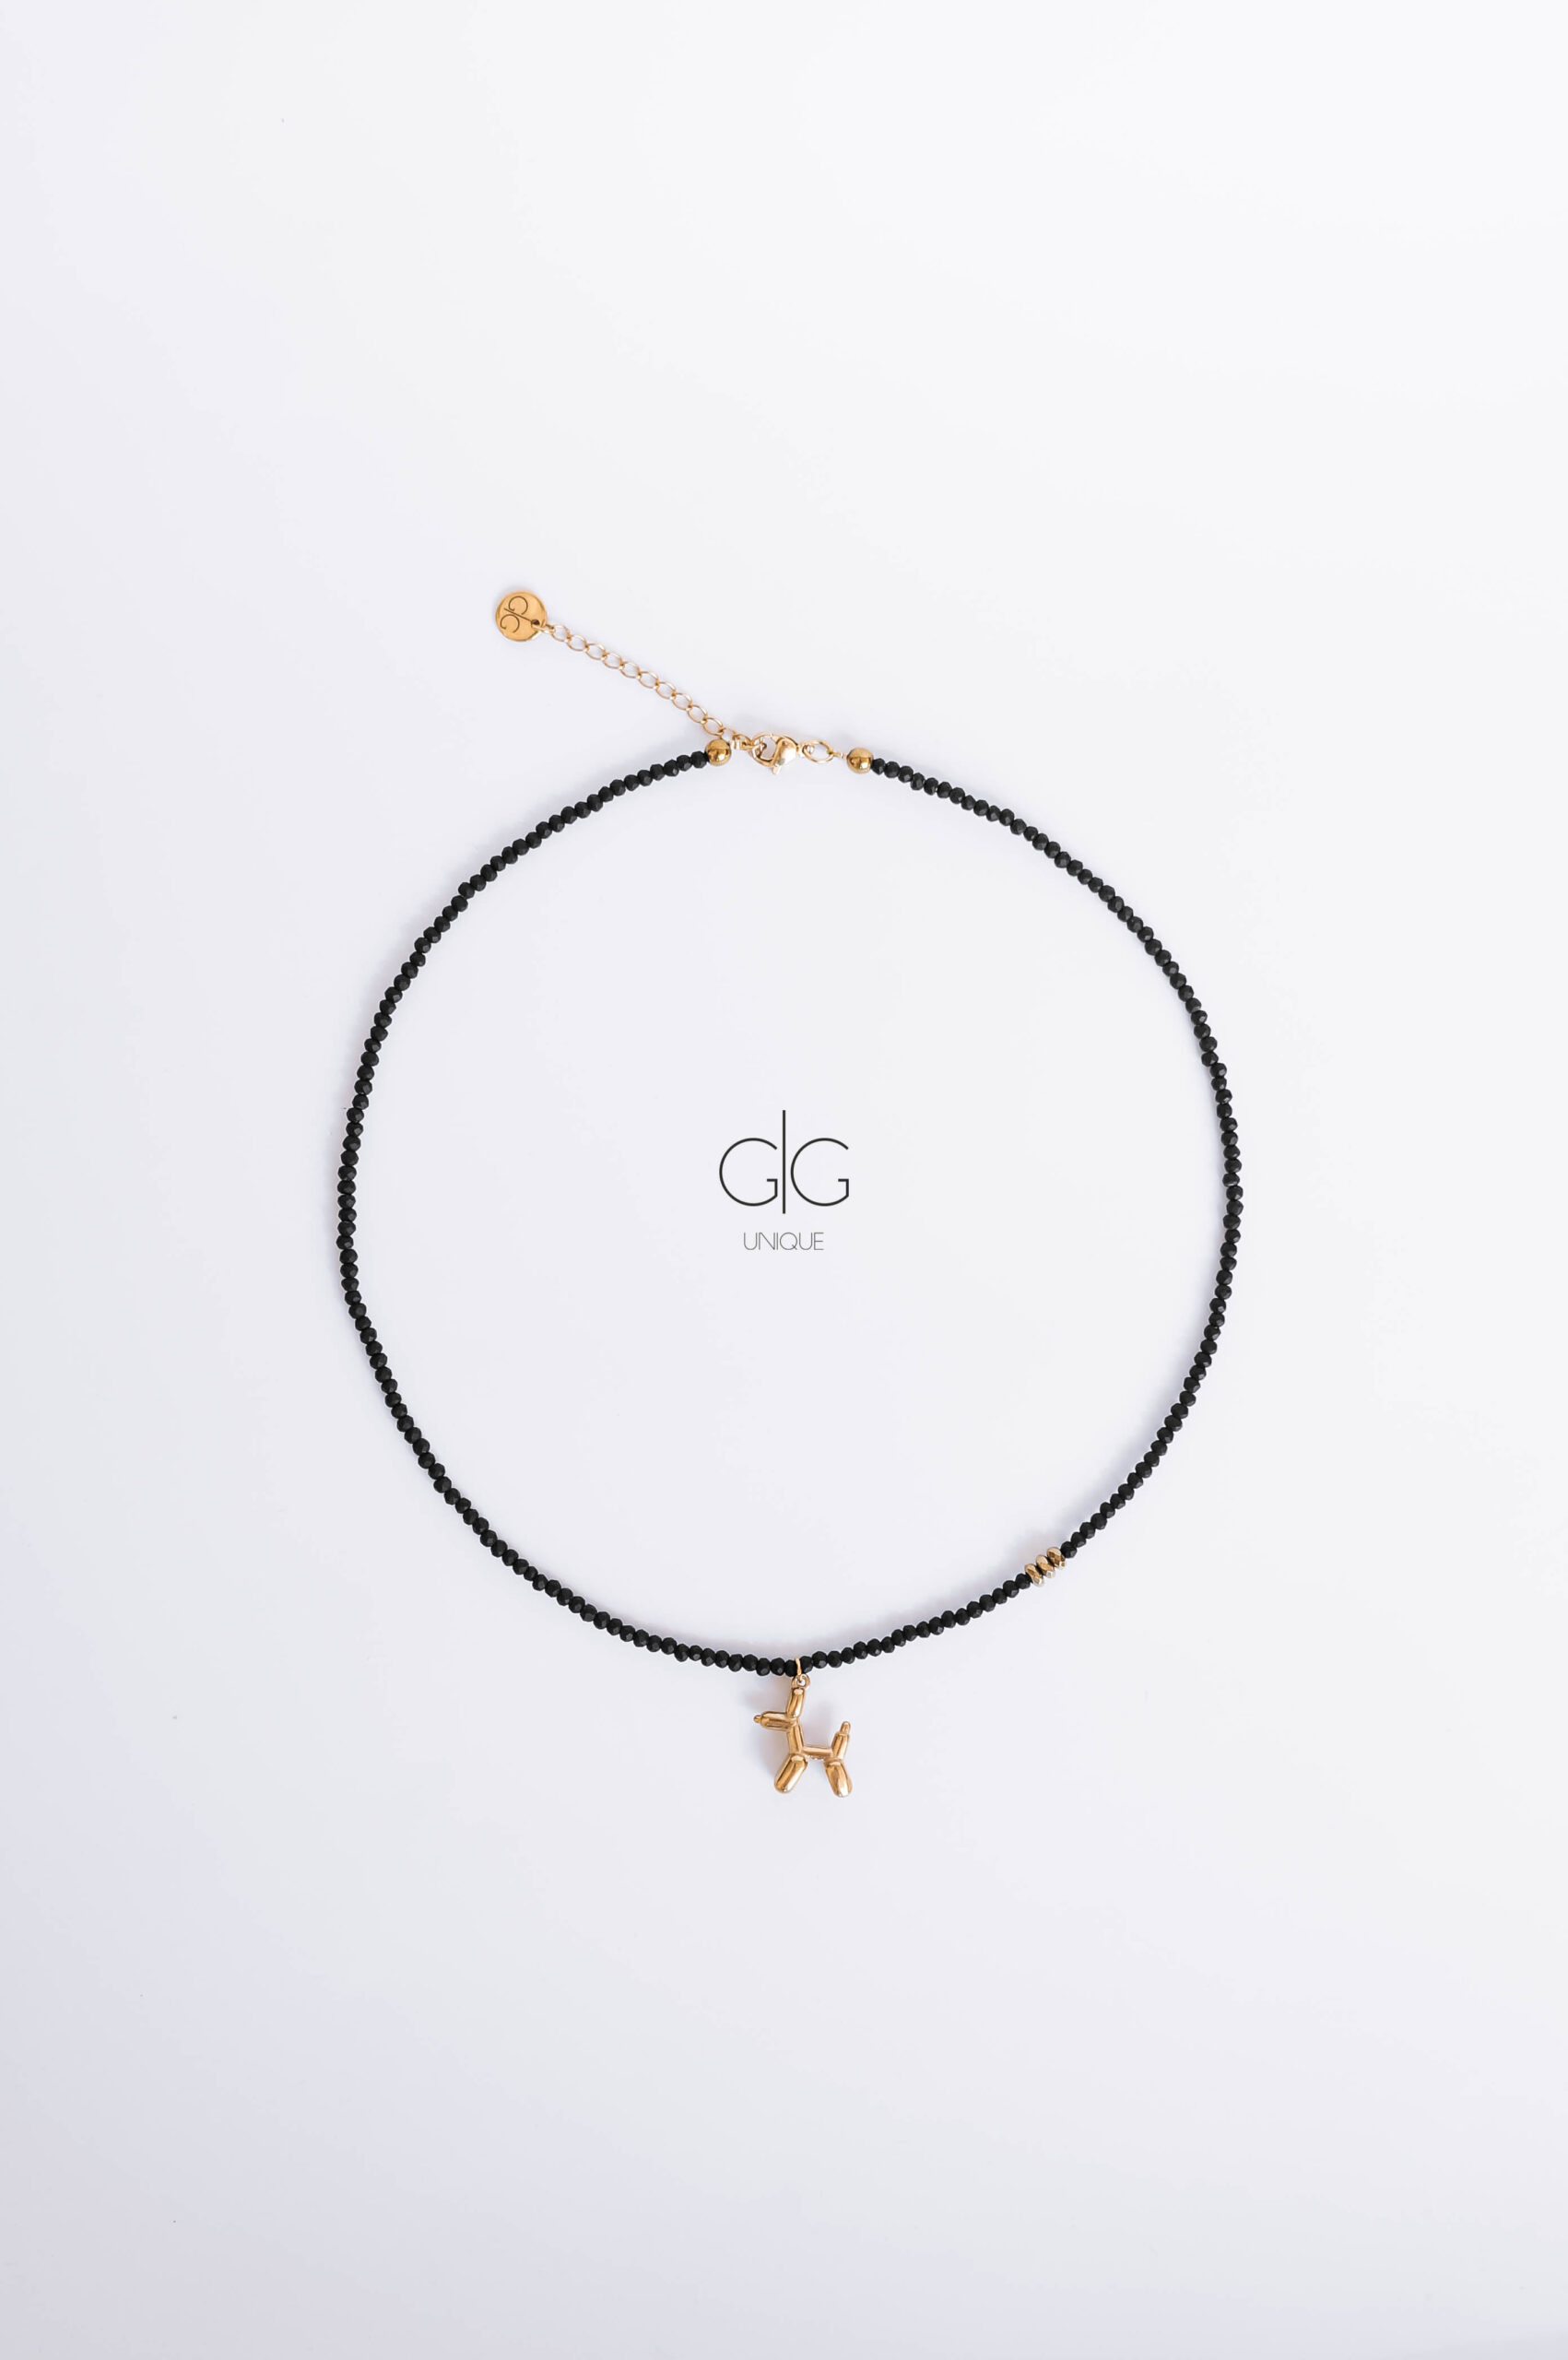 Black necklace with dog - GG Unique